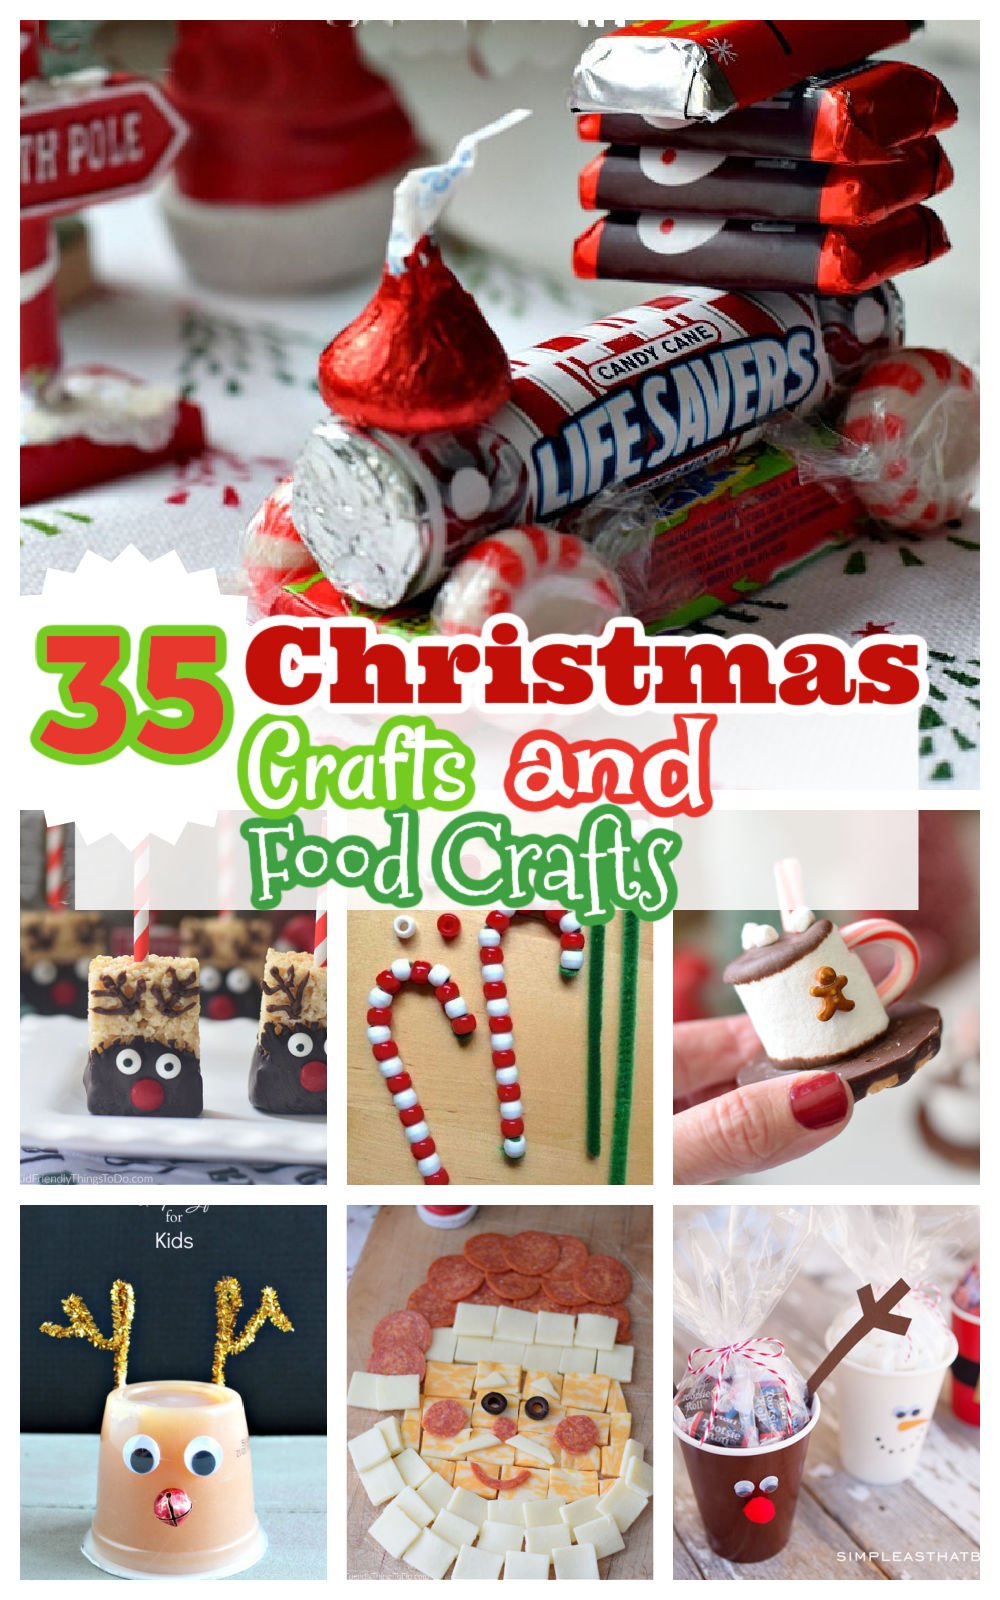 Christmas crafts 